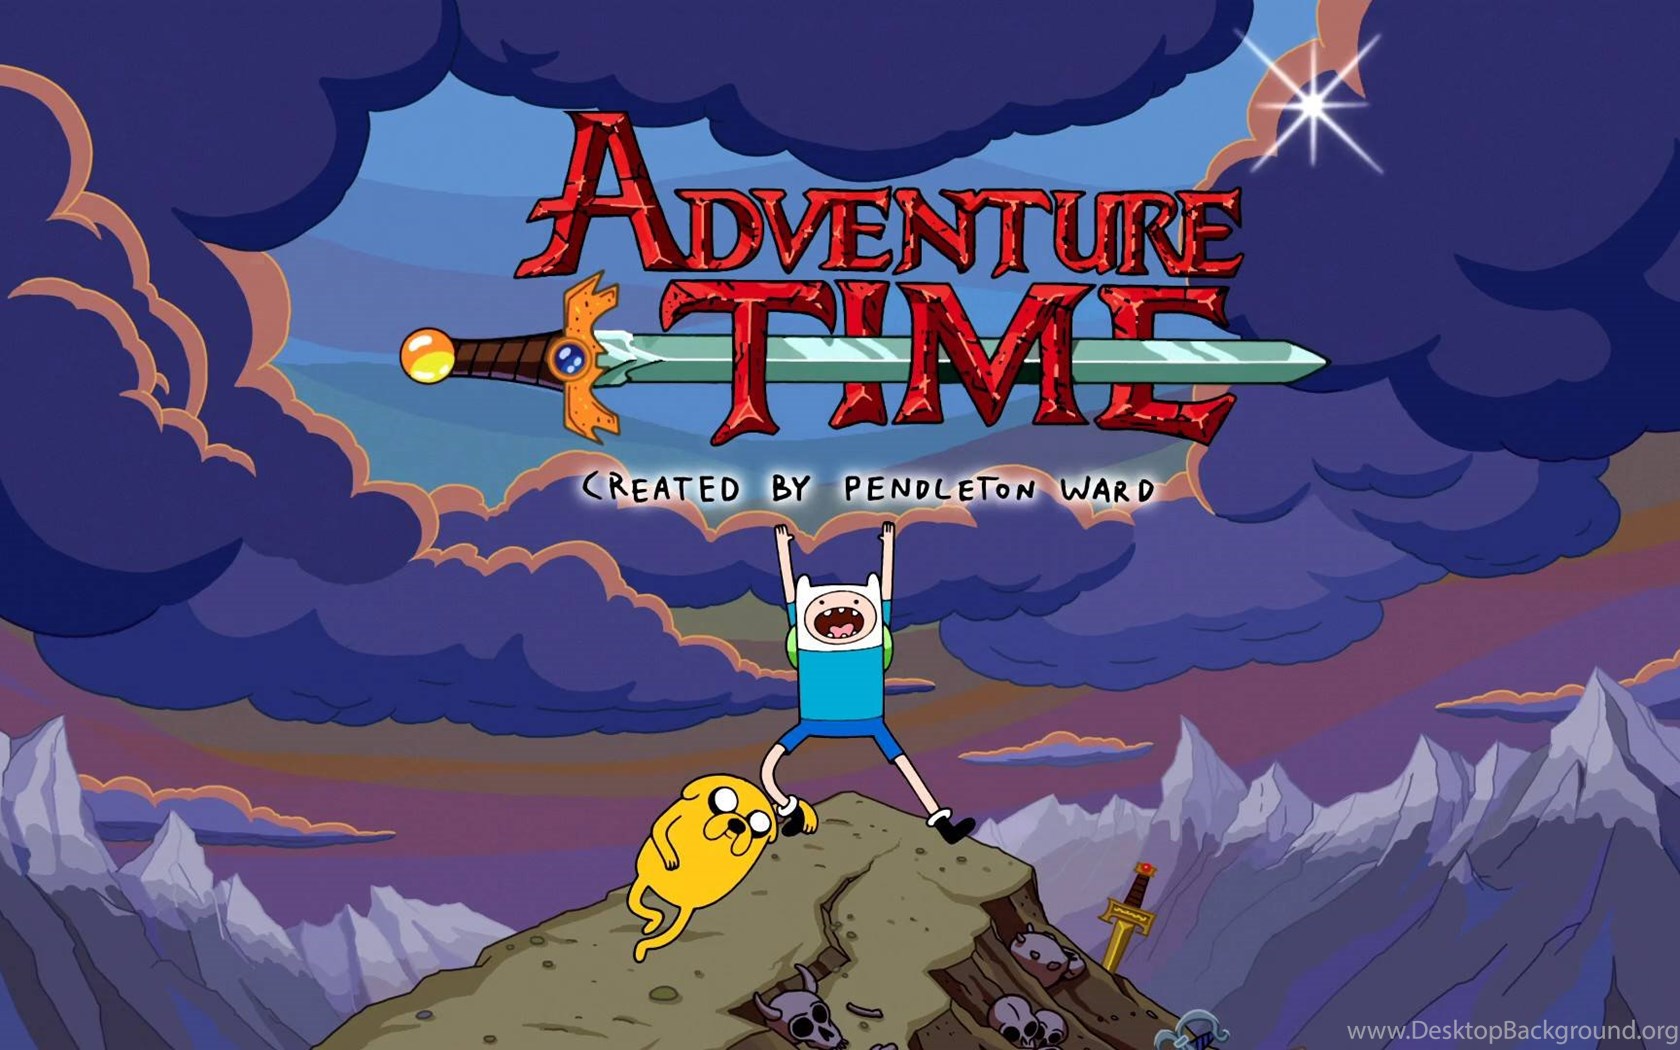 Adventure time steam фото 57